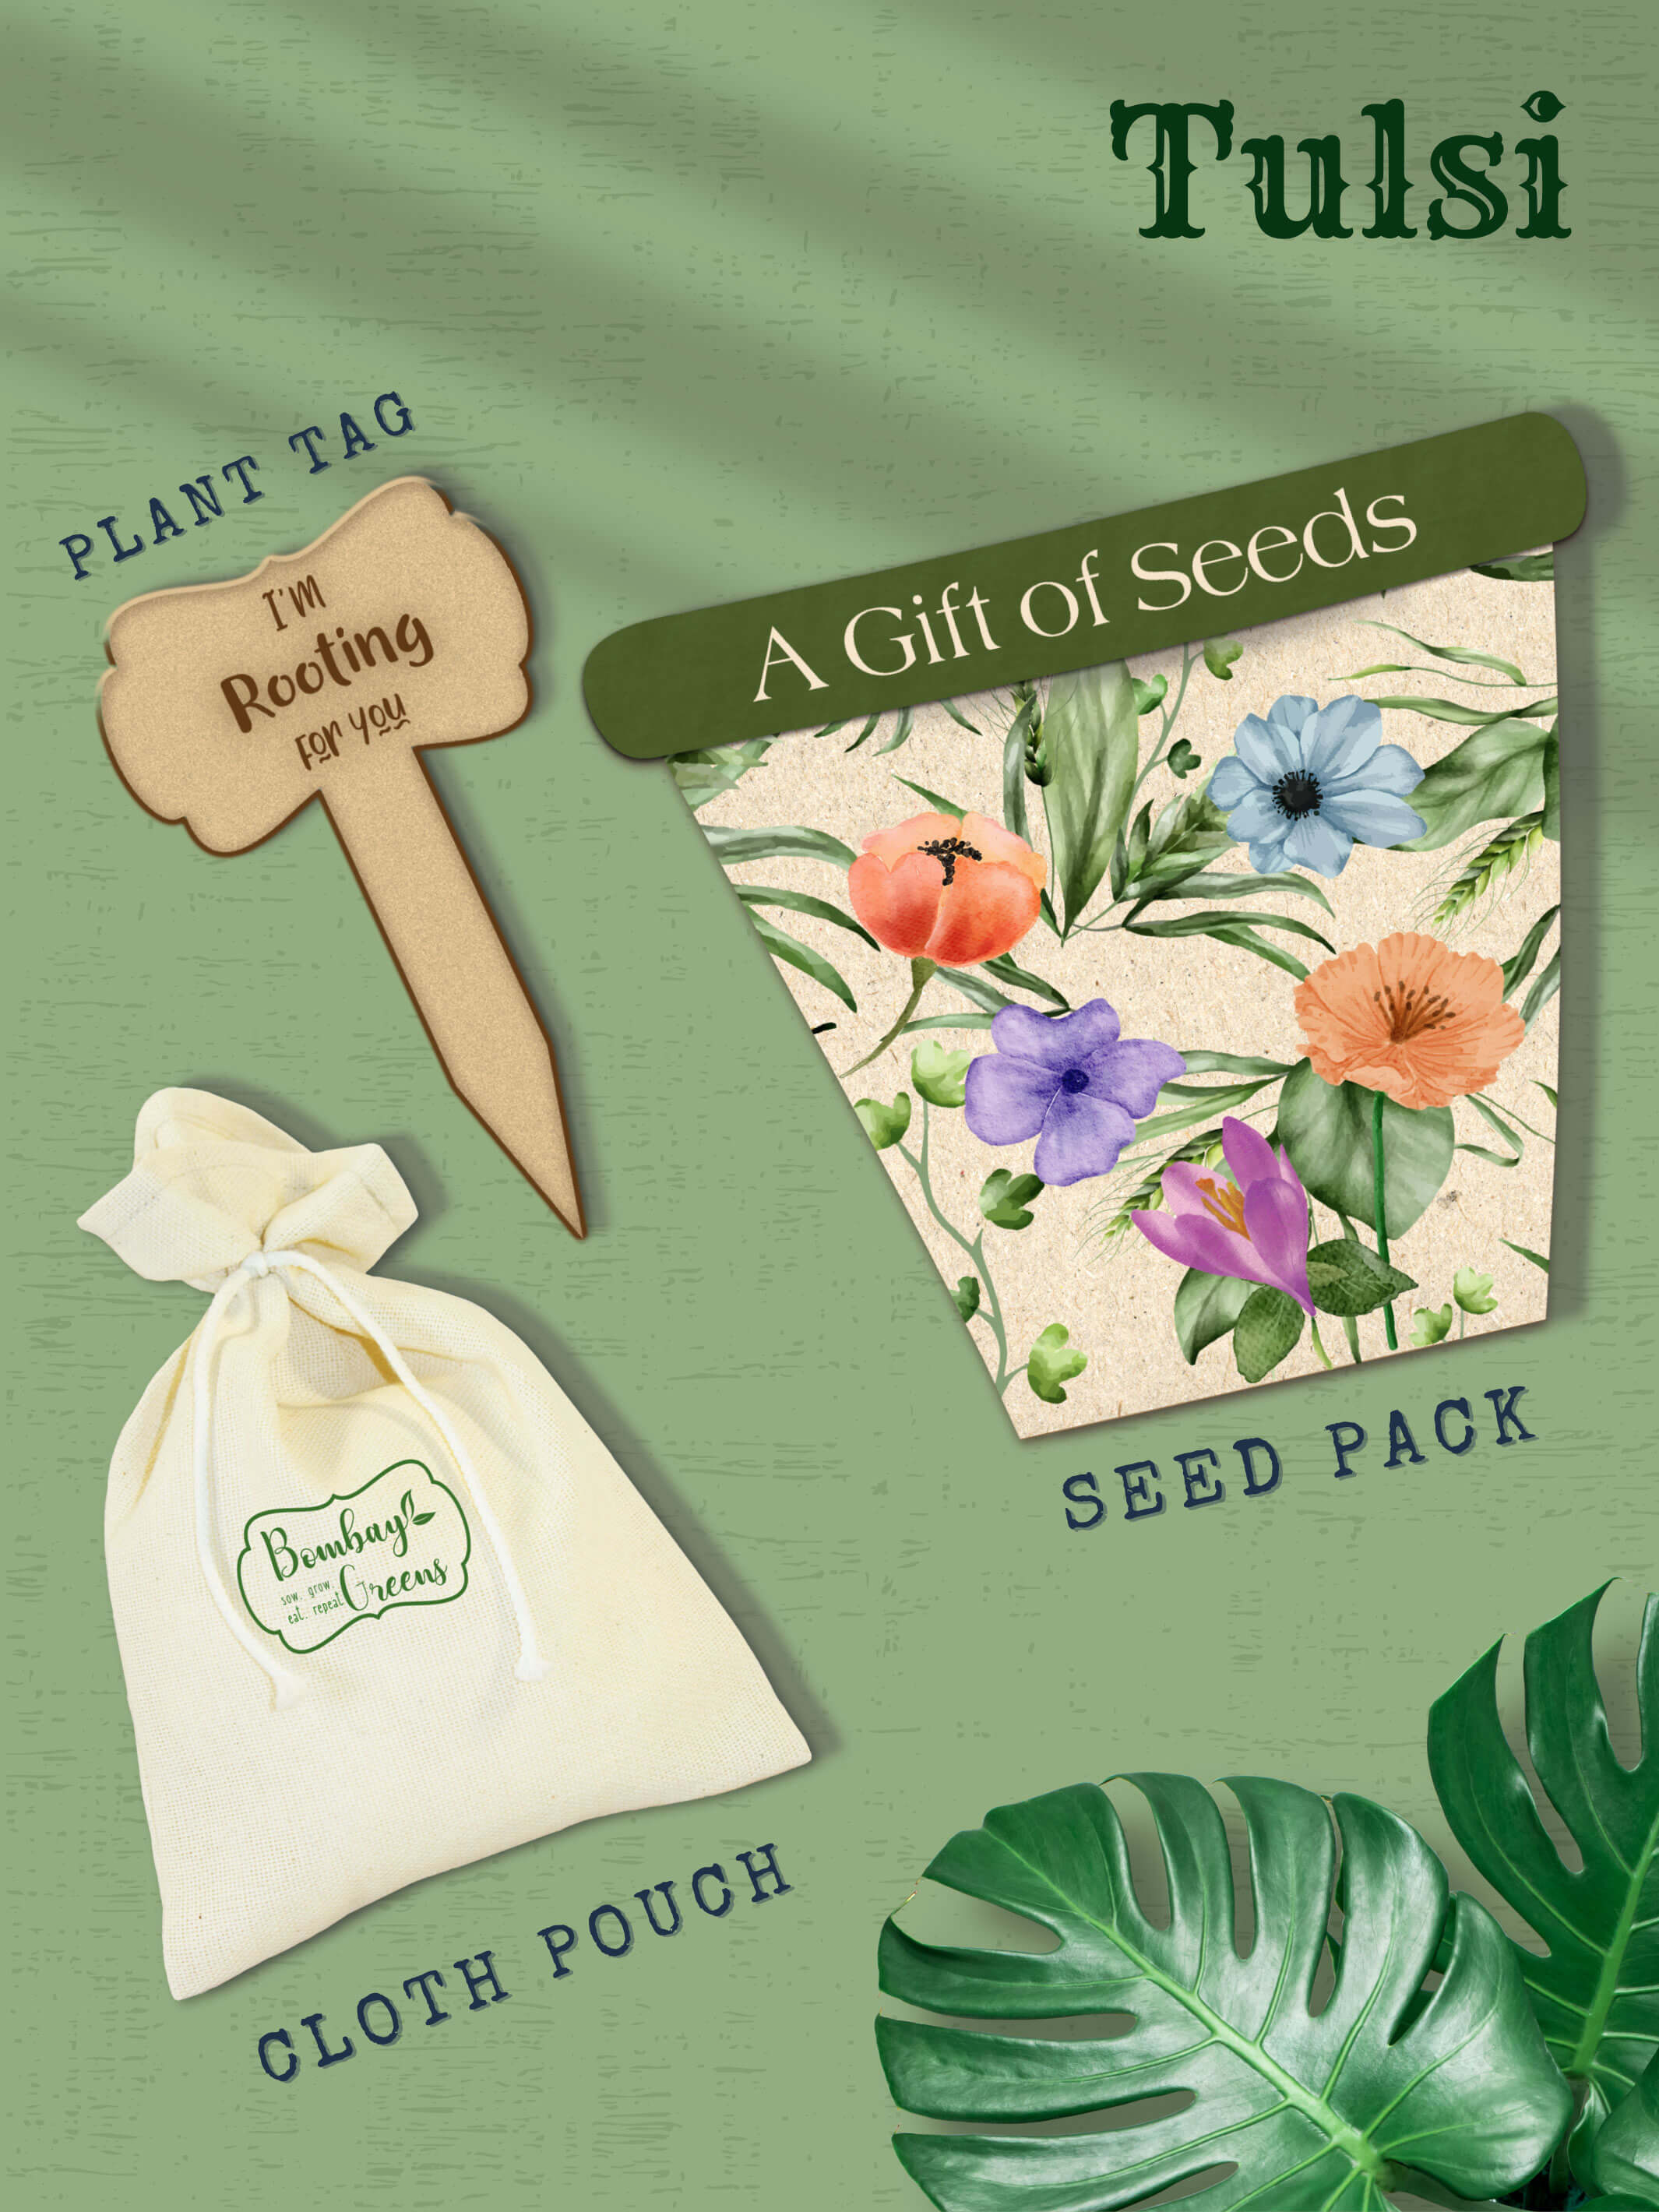 Gift of seeds-Tulsi